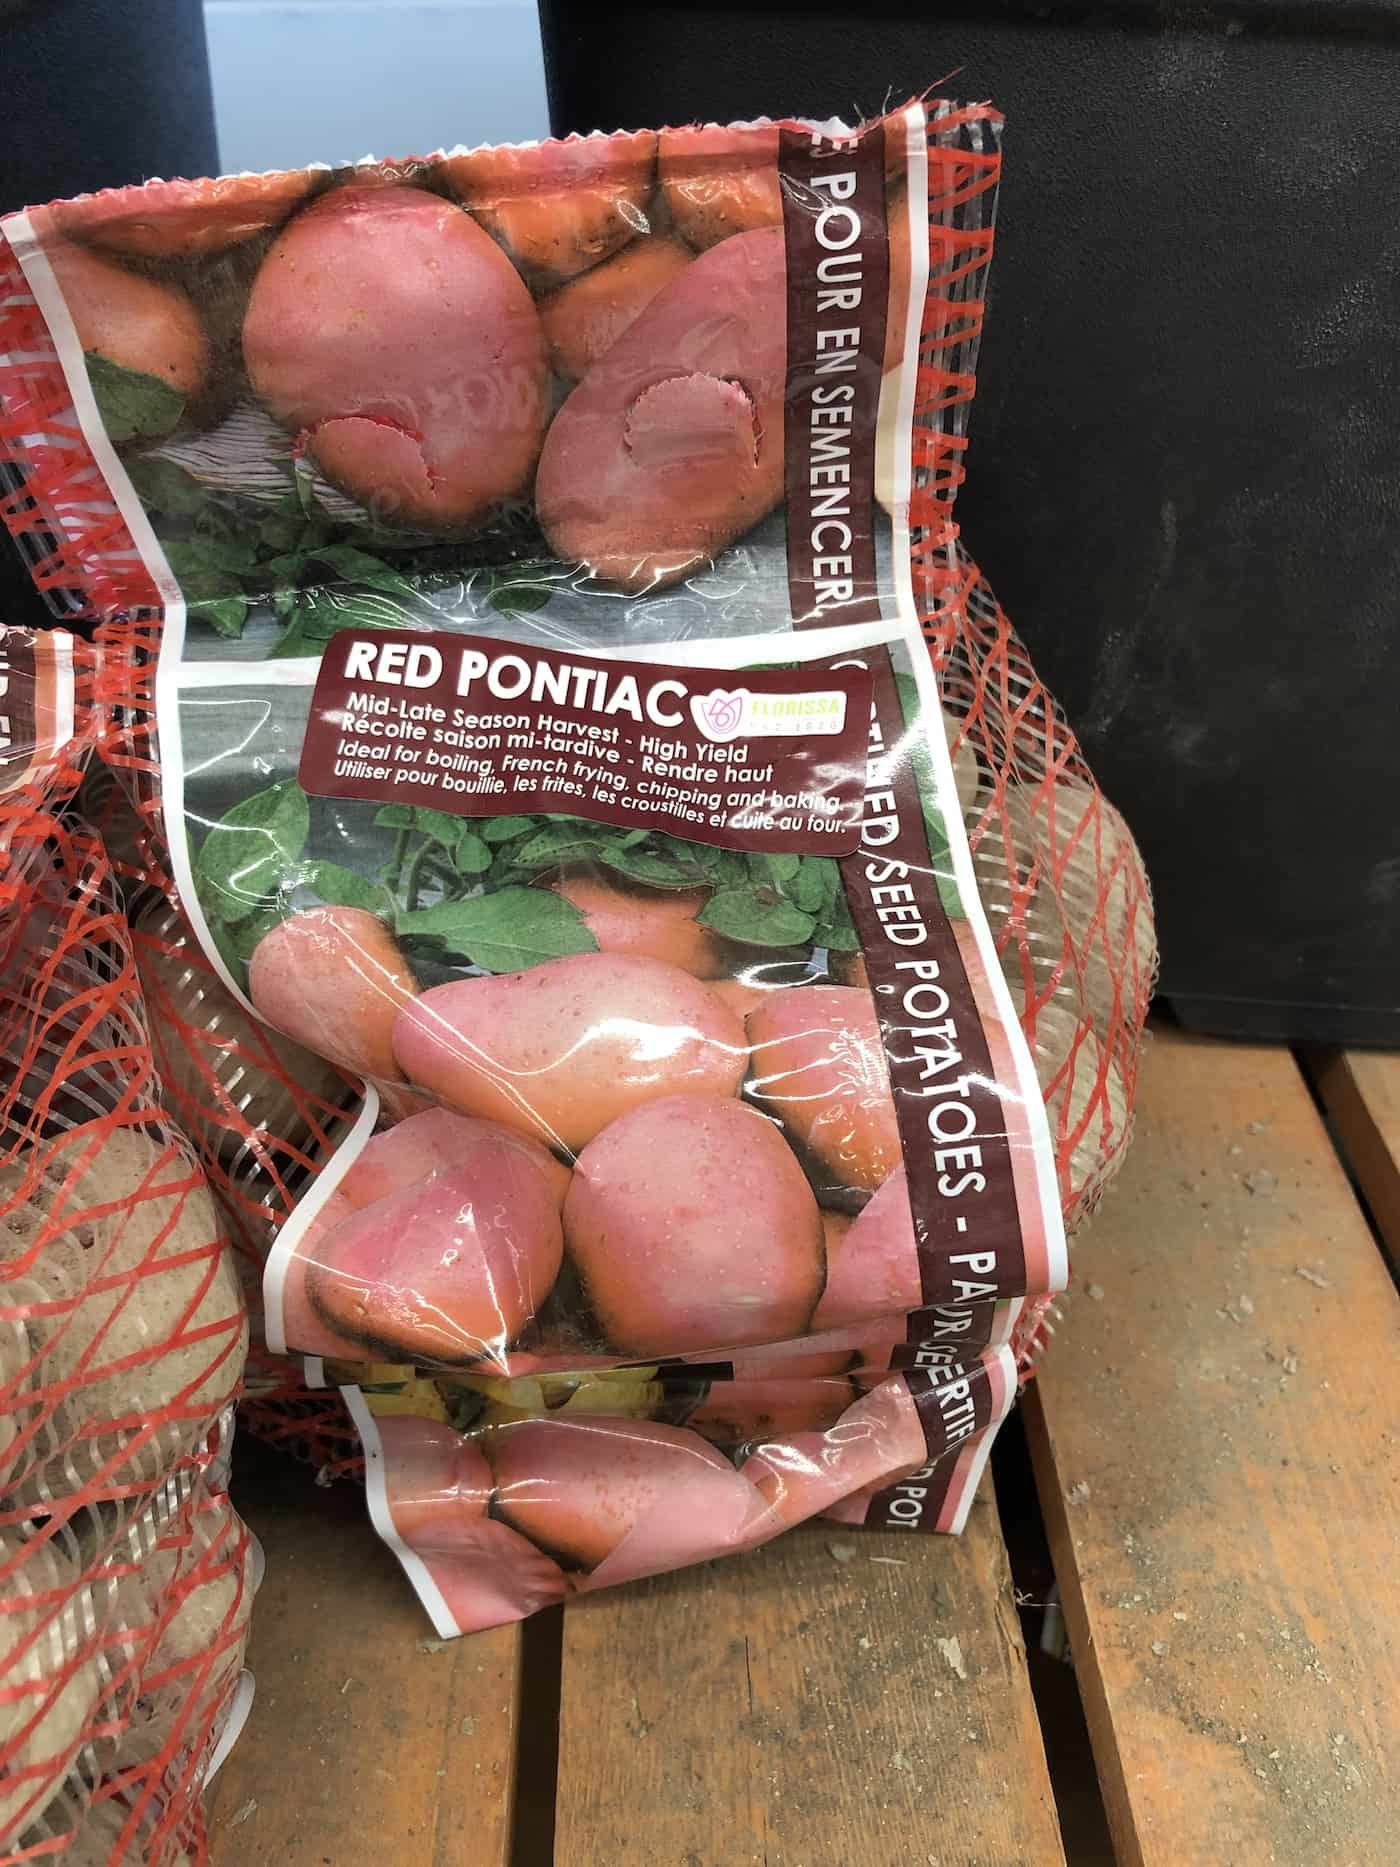 Red pontiac potatoes